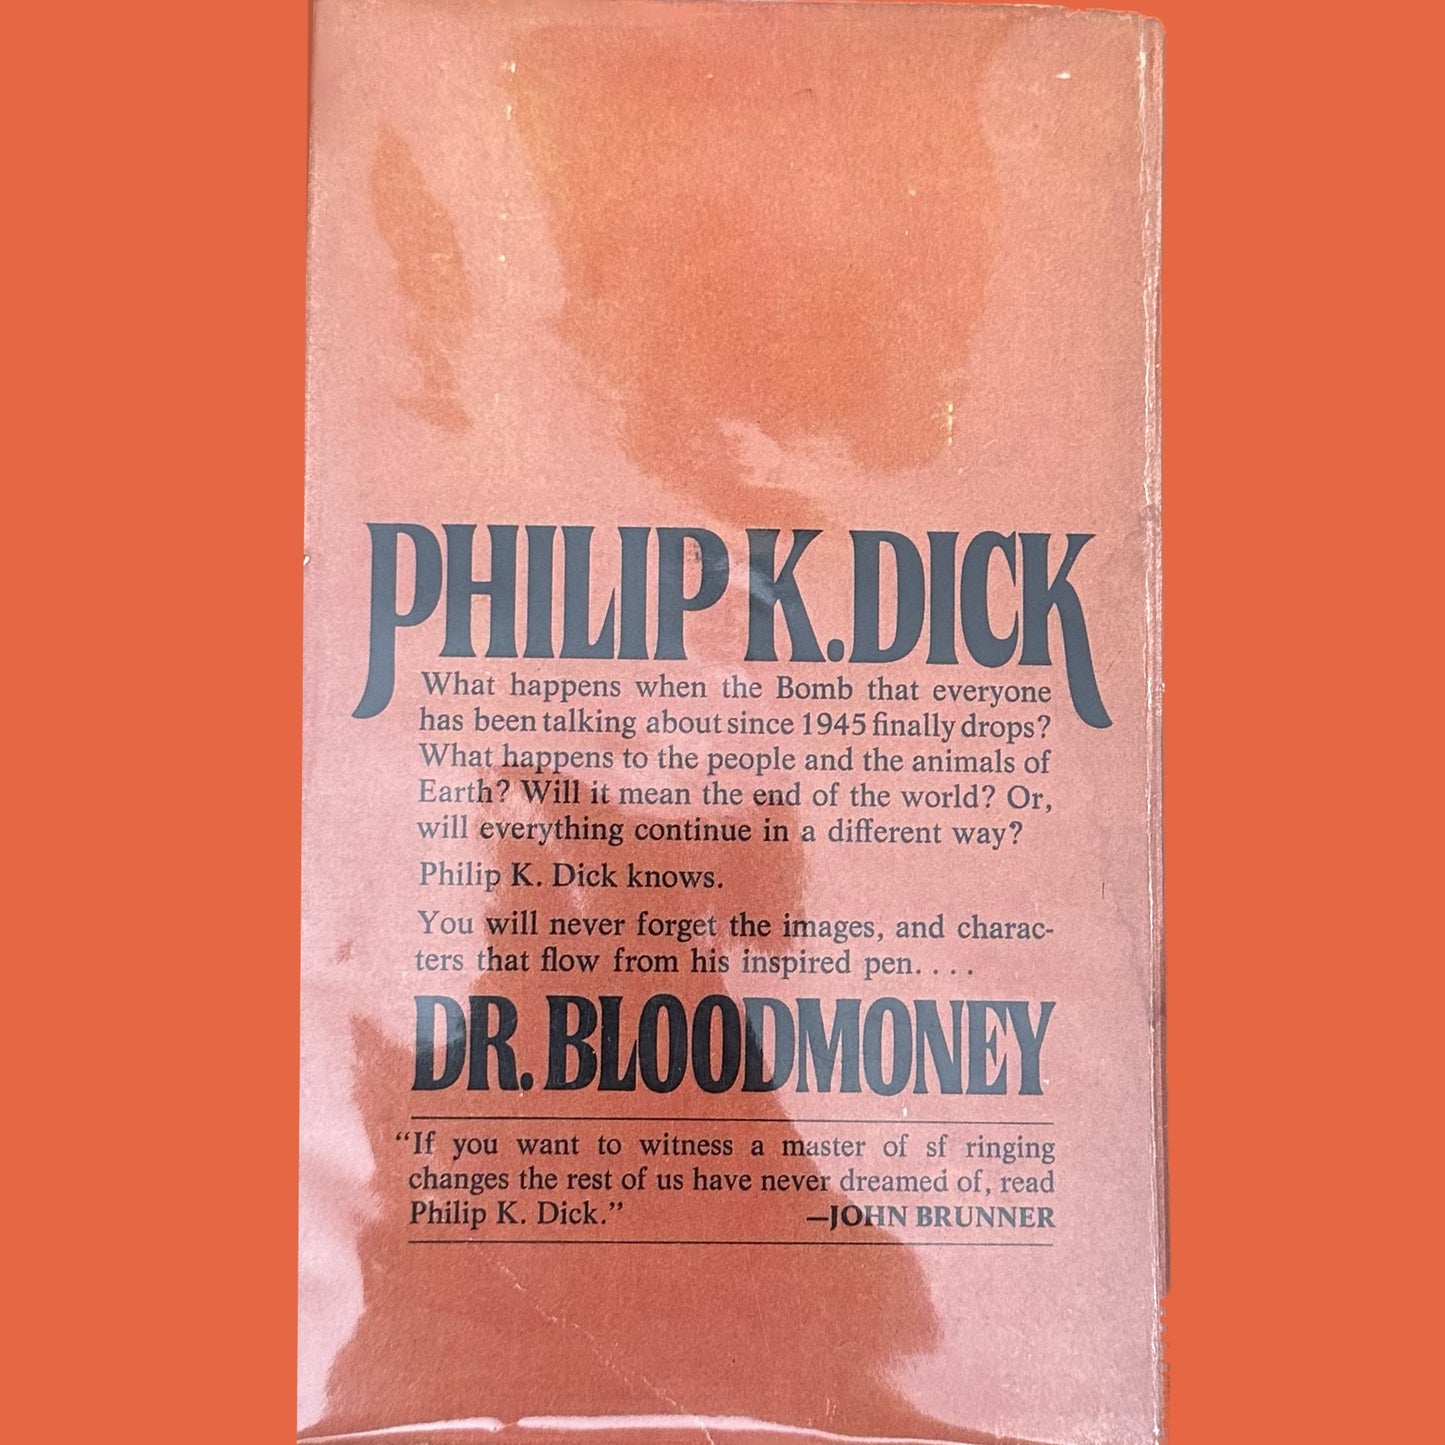 Dr. Bloodmoney by Phillip K Dick, 1965